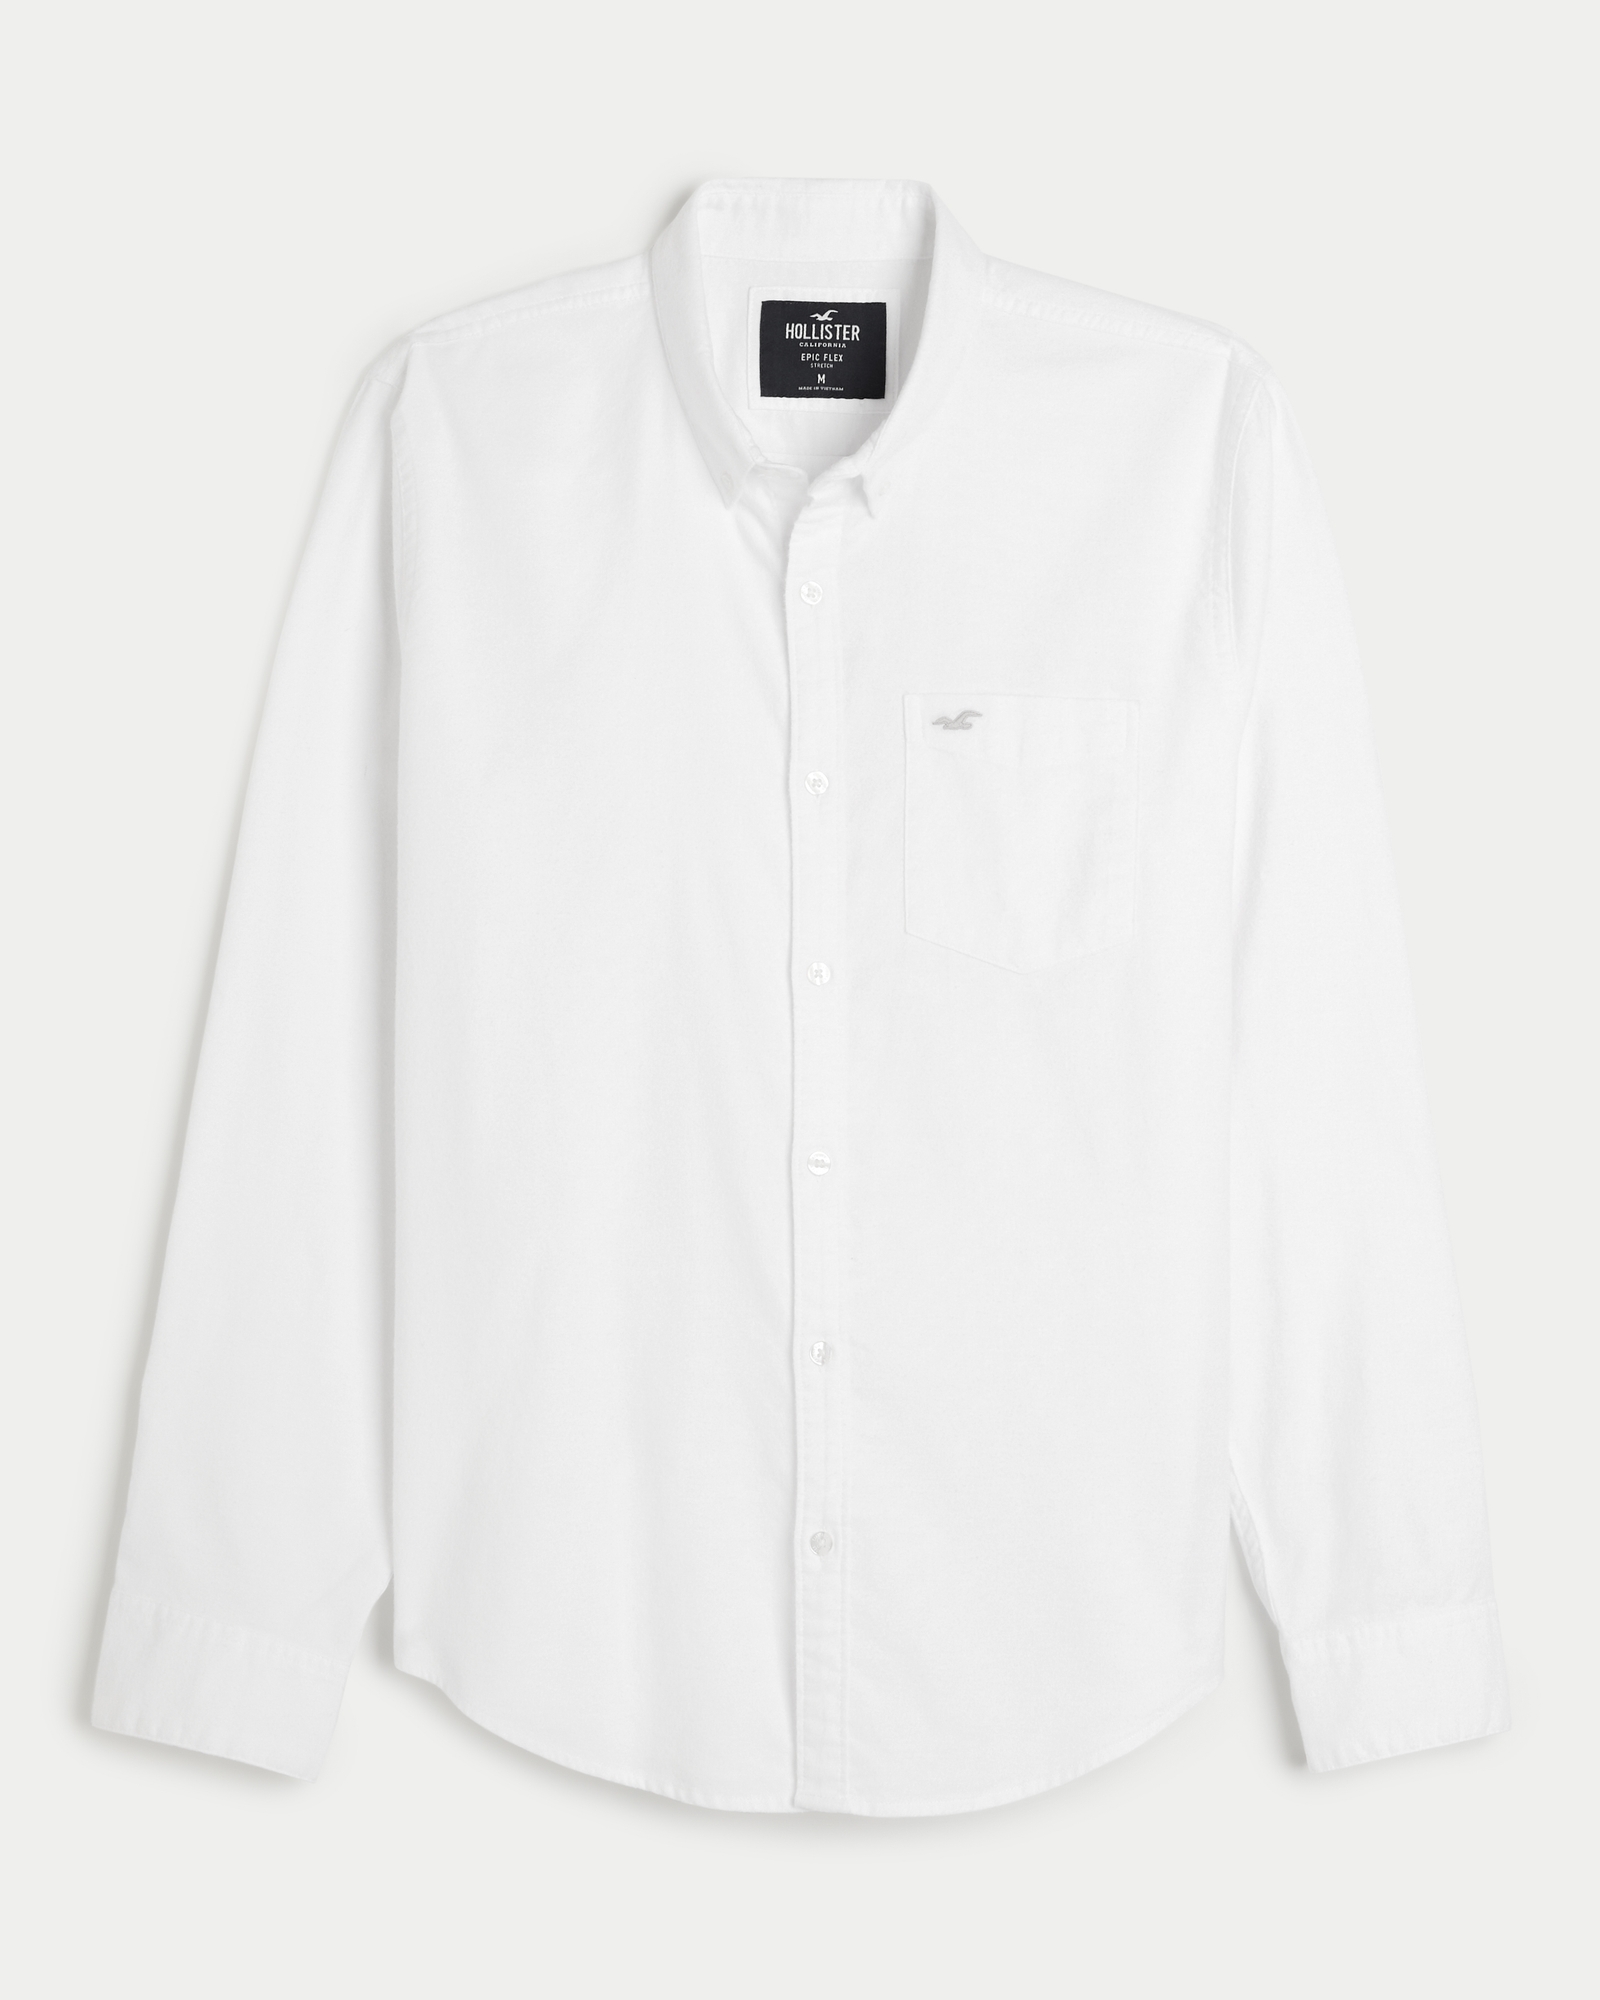 Hollister California Epic Flex Stretch Polo Shirt Size M White-Black